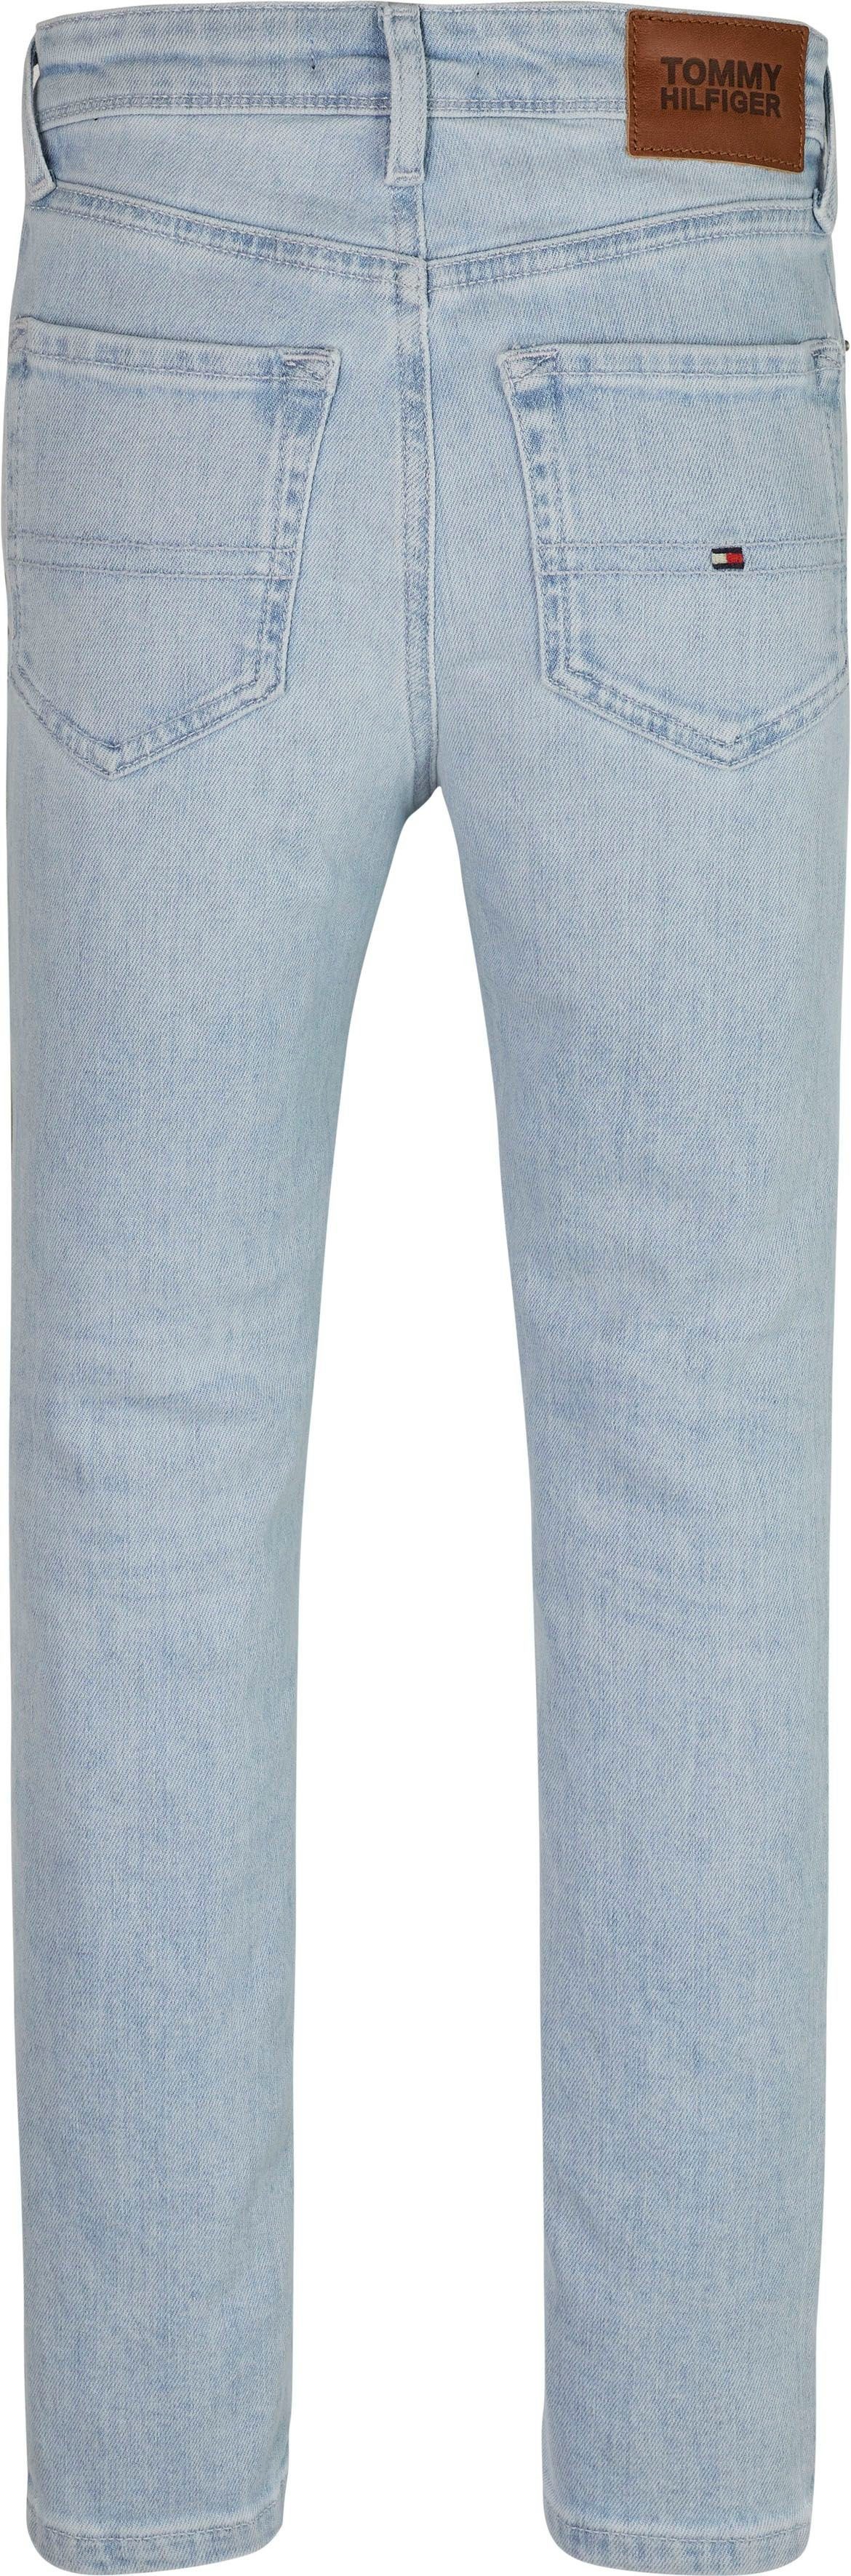 HEMP Y SCANTON Tommy Hilfiger 5-Pocket-Style LIGHT im Slim-fit-Jeans